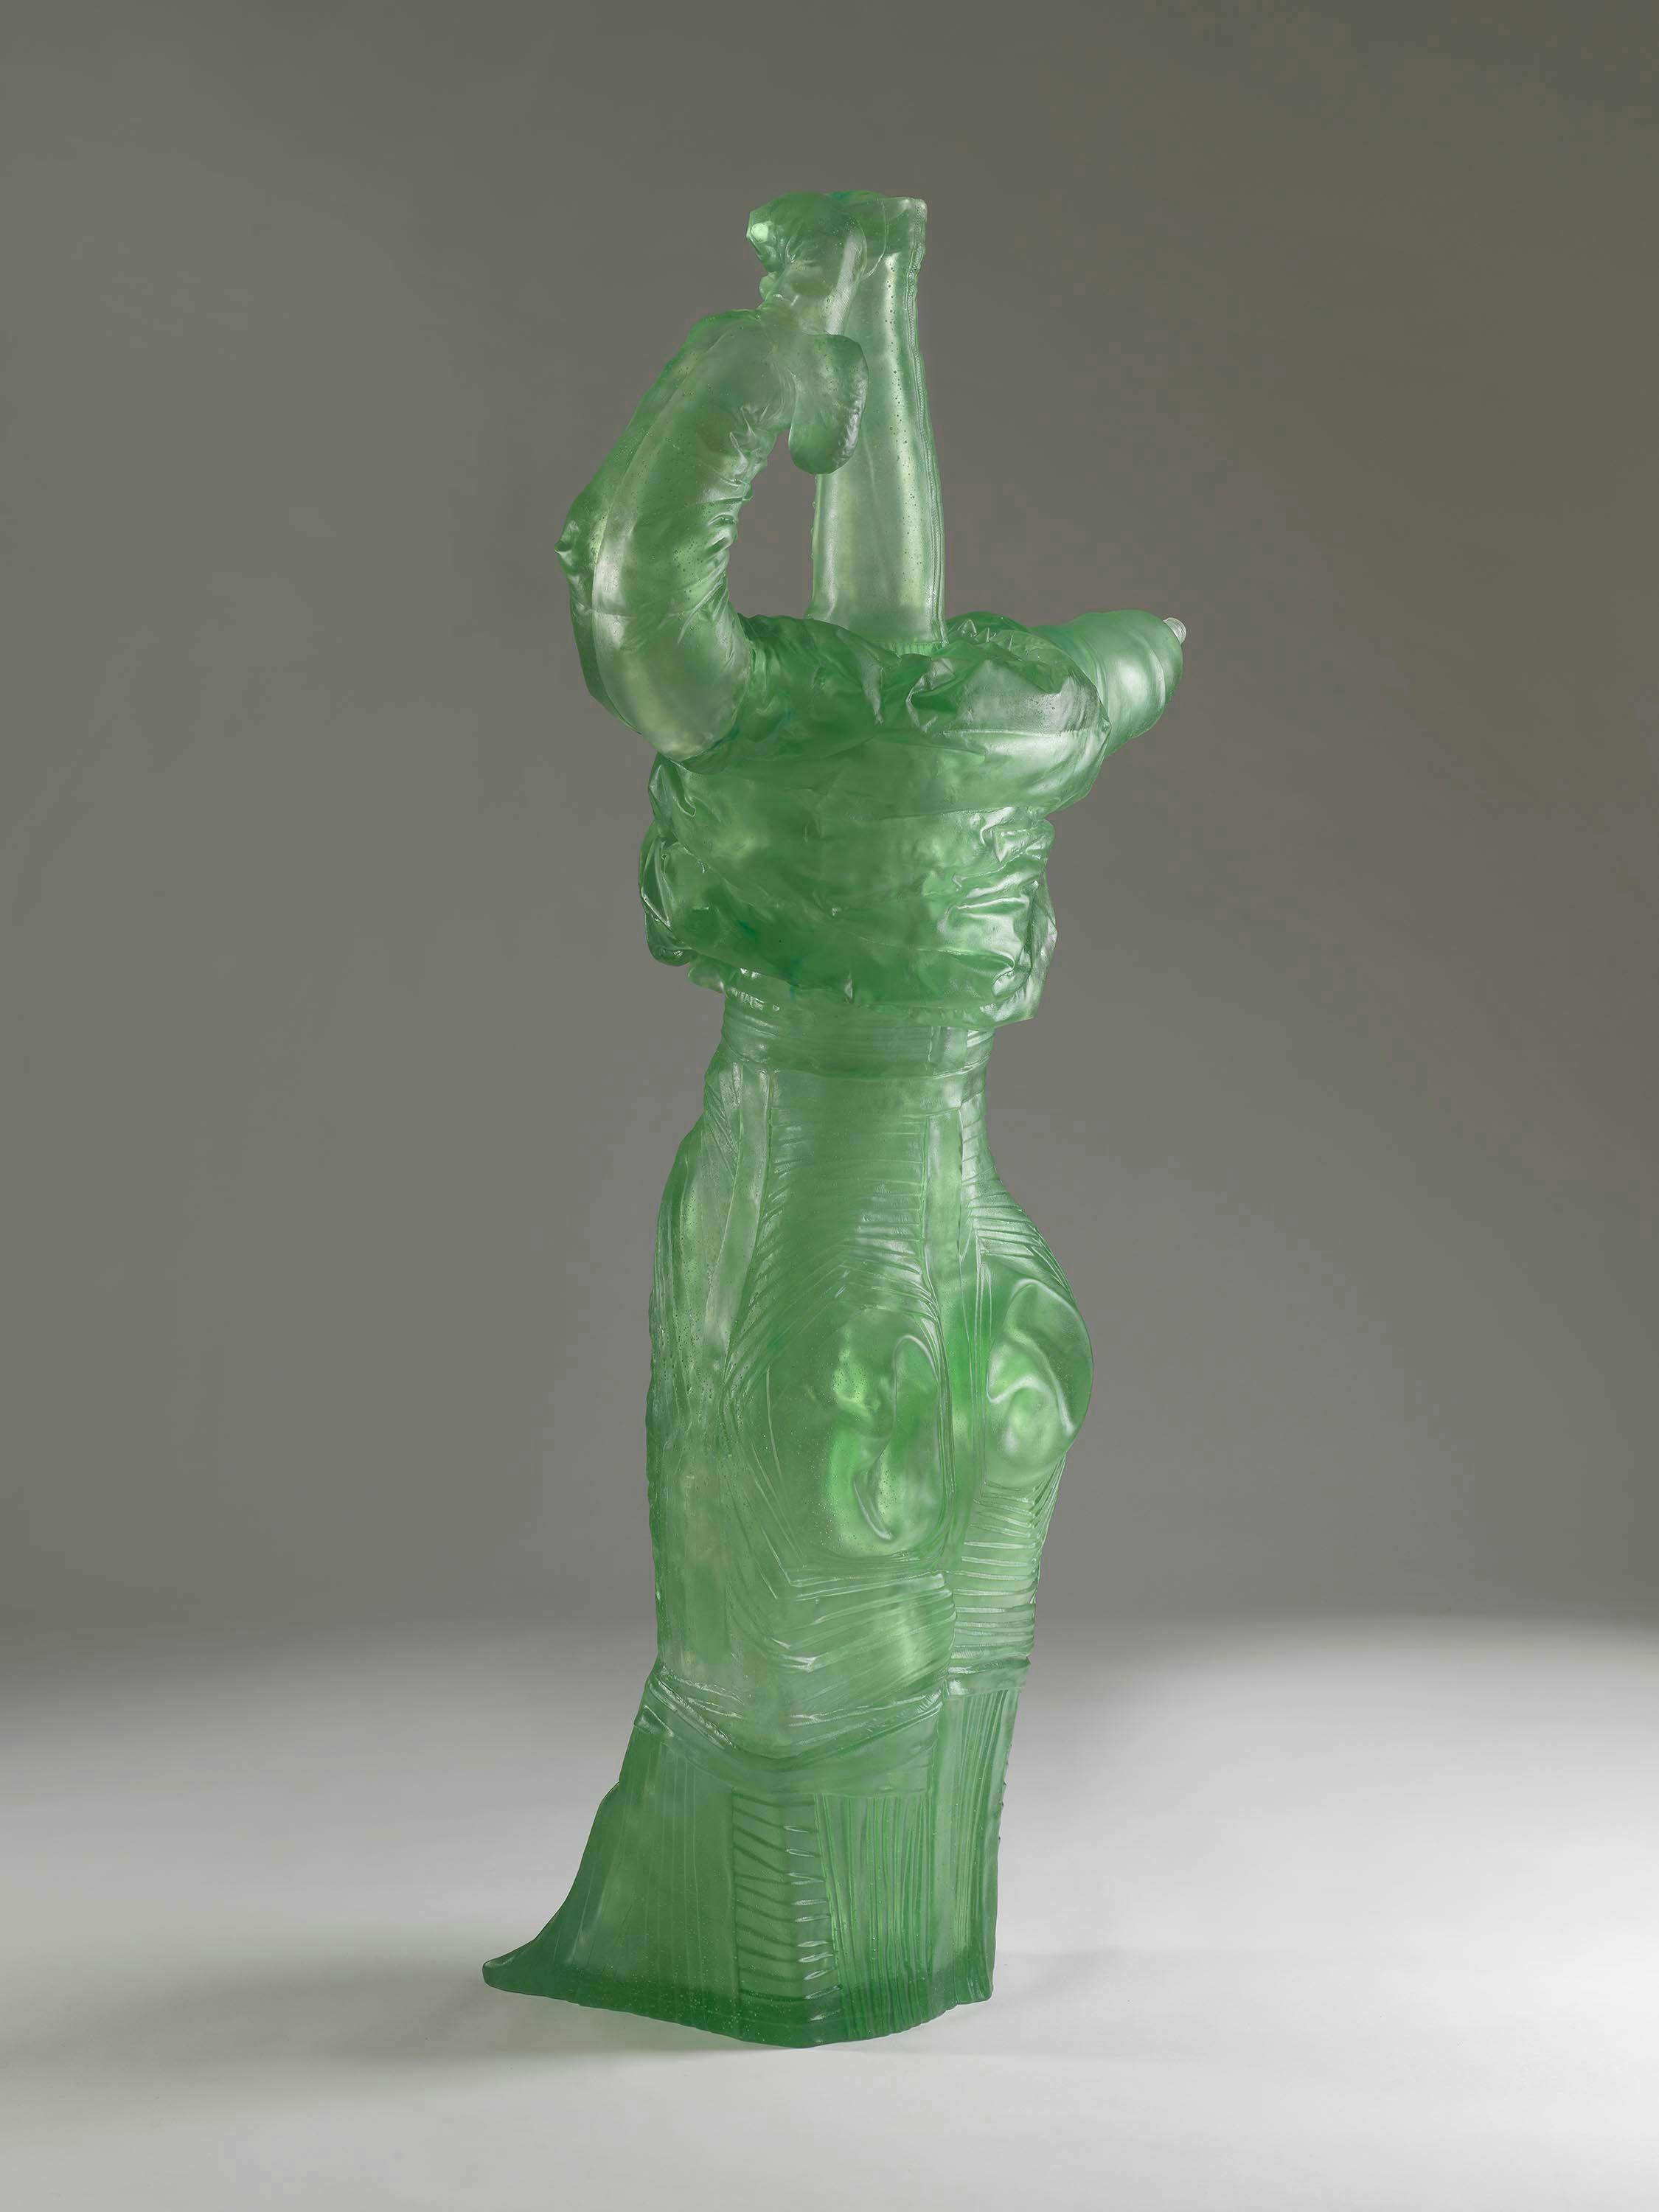 A sculpture by Andra Ursuta, titled Half-Drunk Mummy, dated 2020.